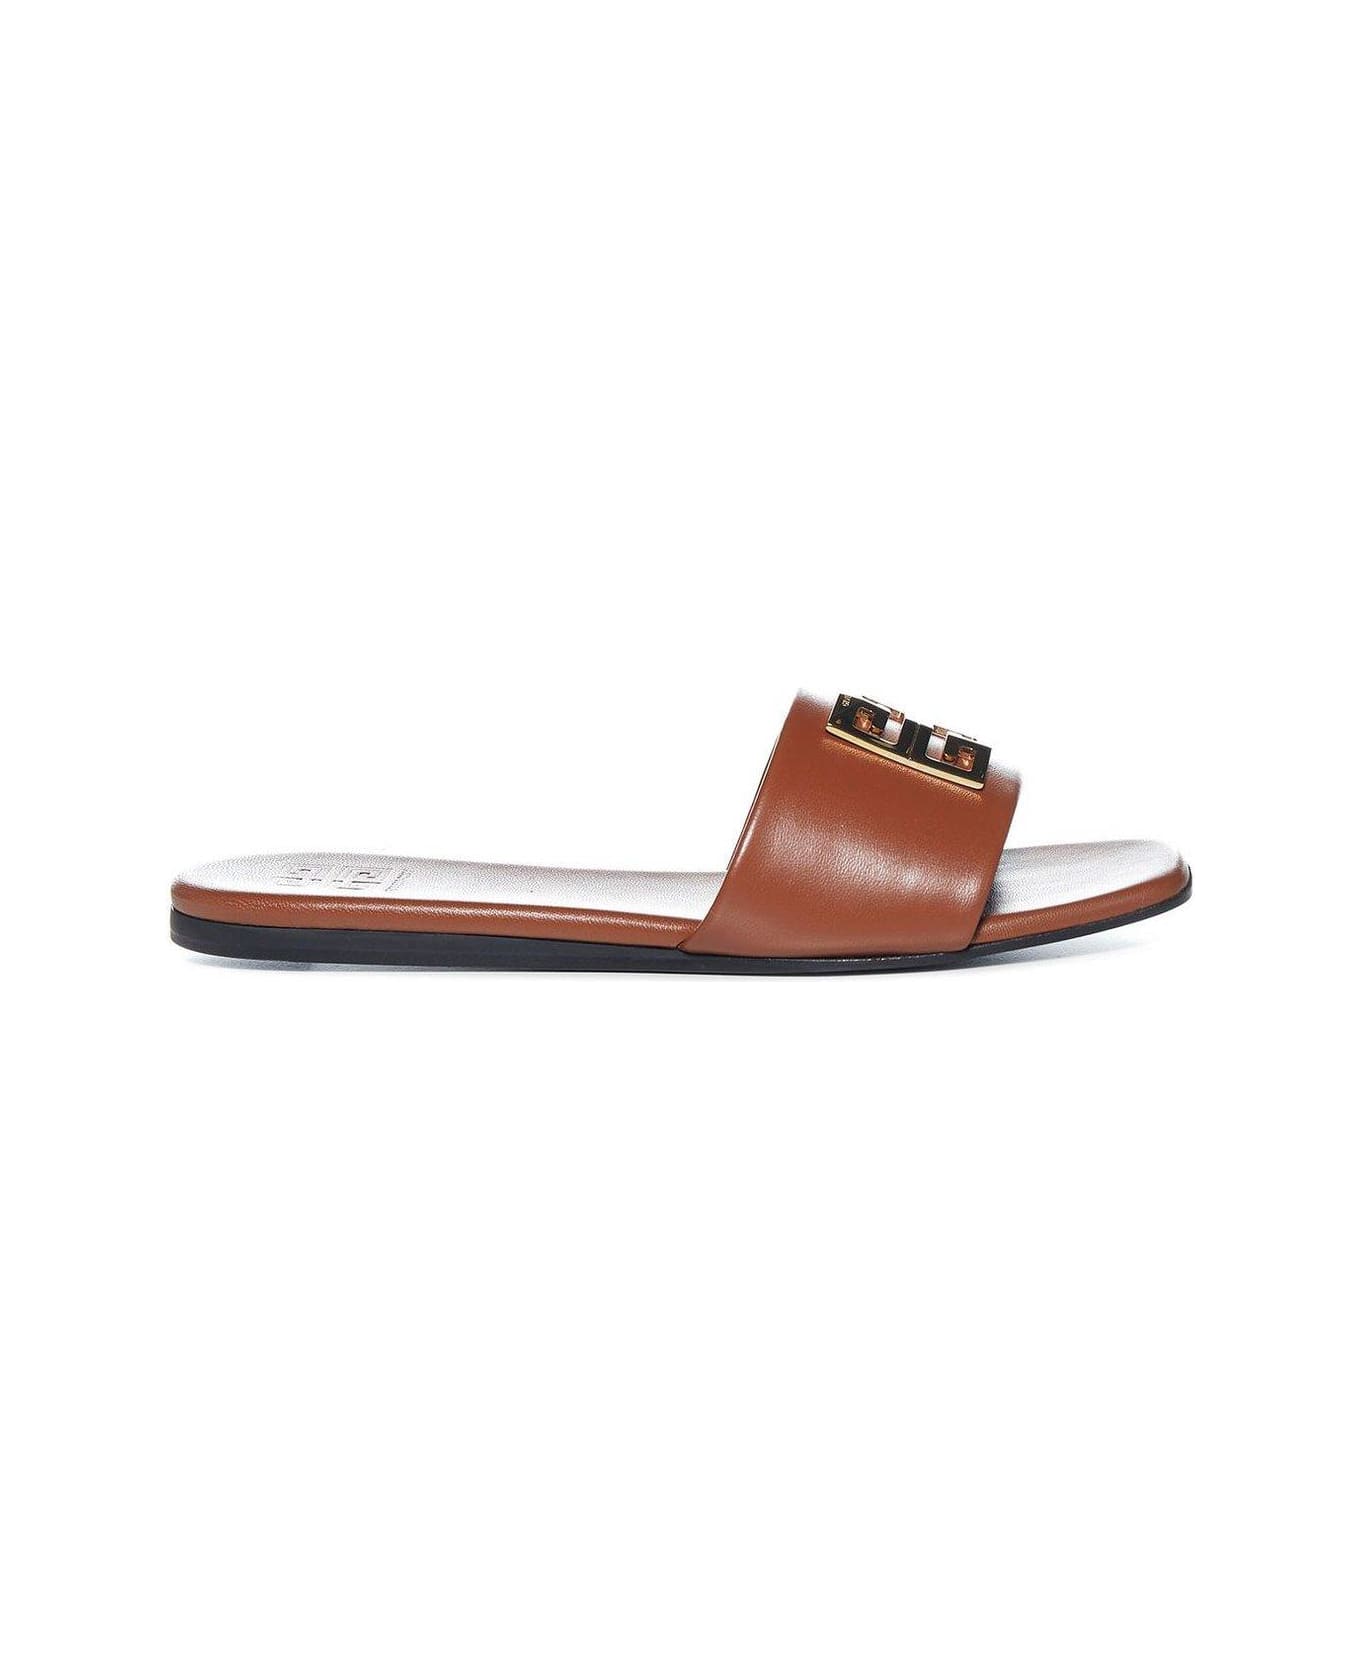 Givenchy 4g Motif Flat Sandals - BROWN